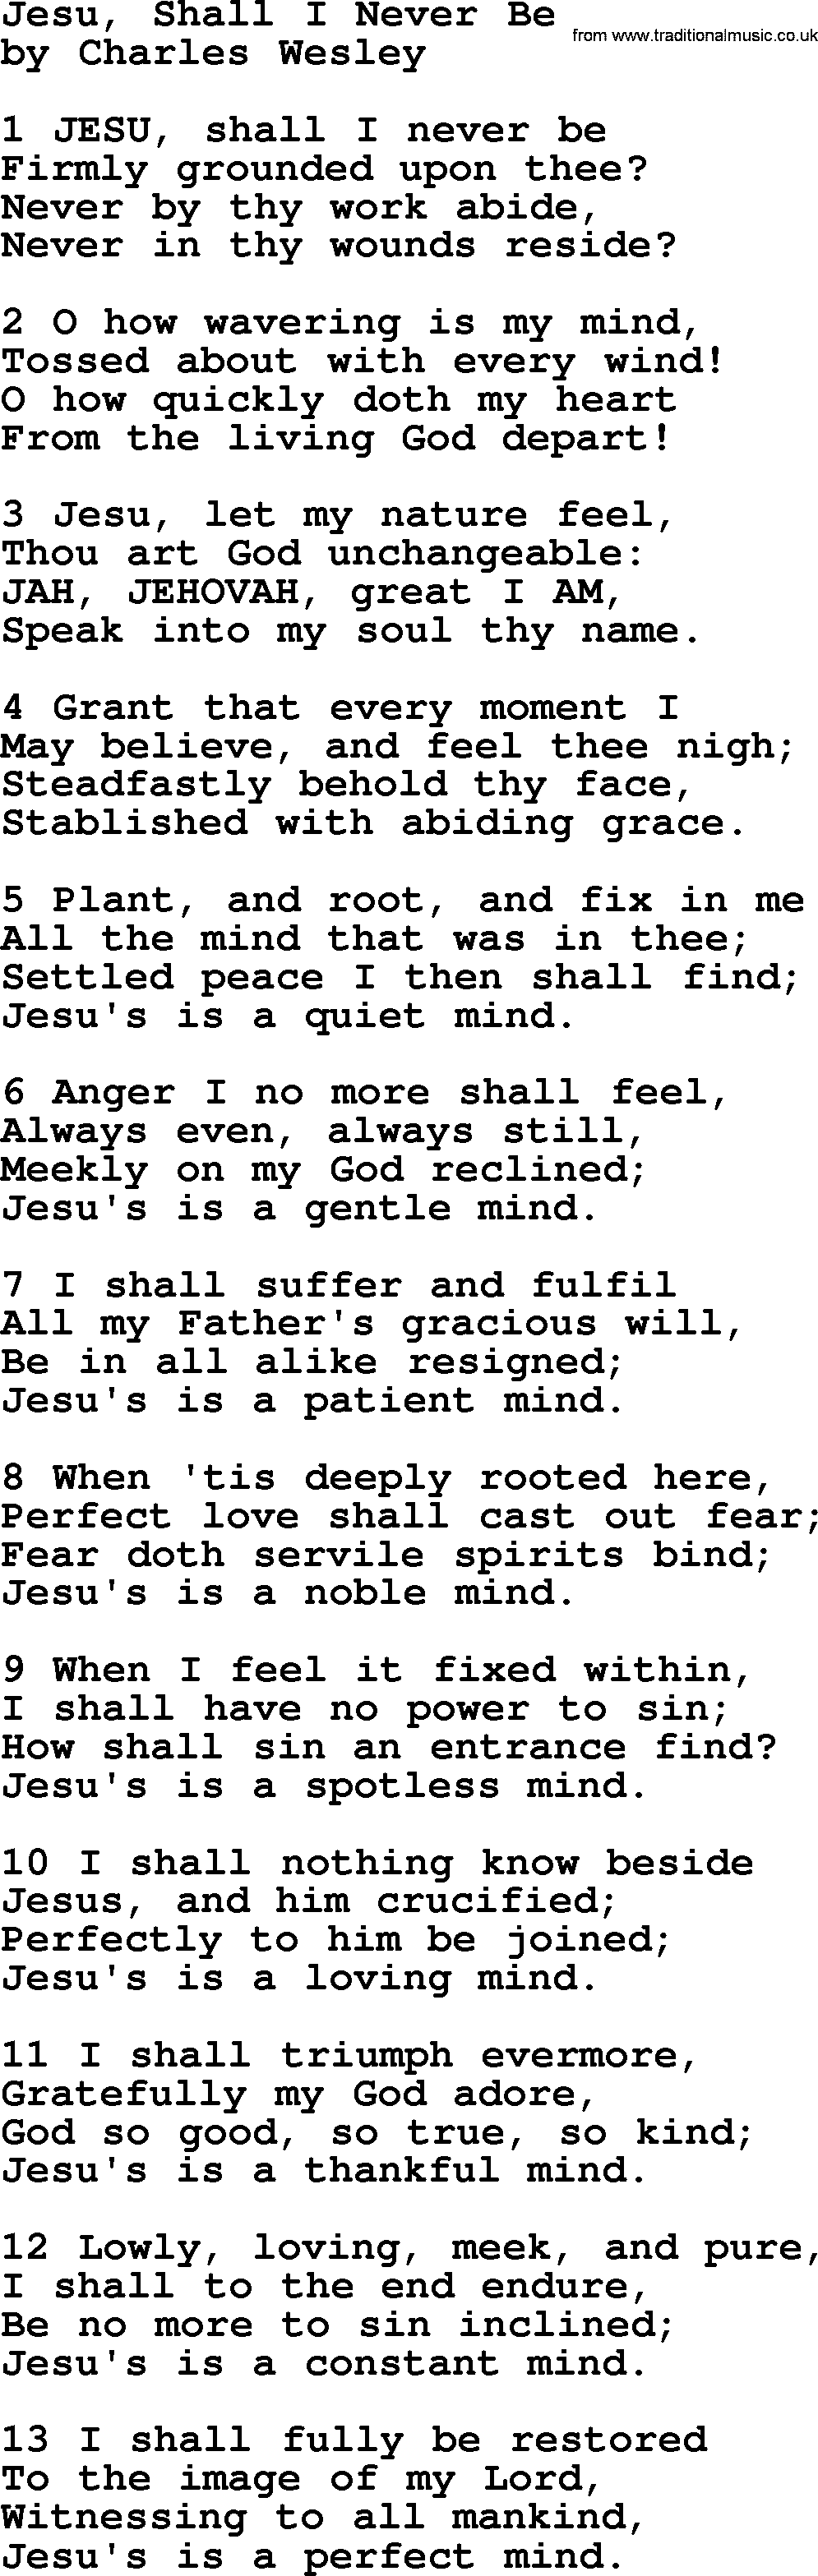 Charles Wesley hymn: Jesu, Shall I Never Be, lyrics